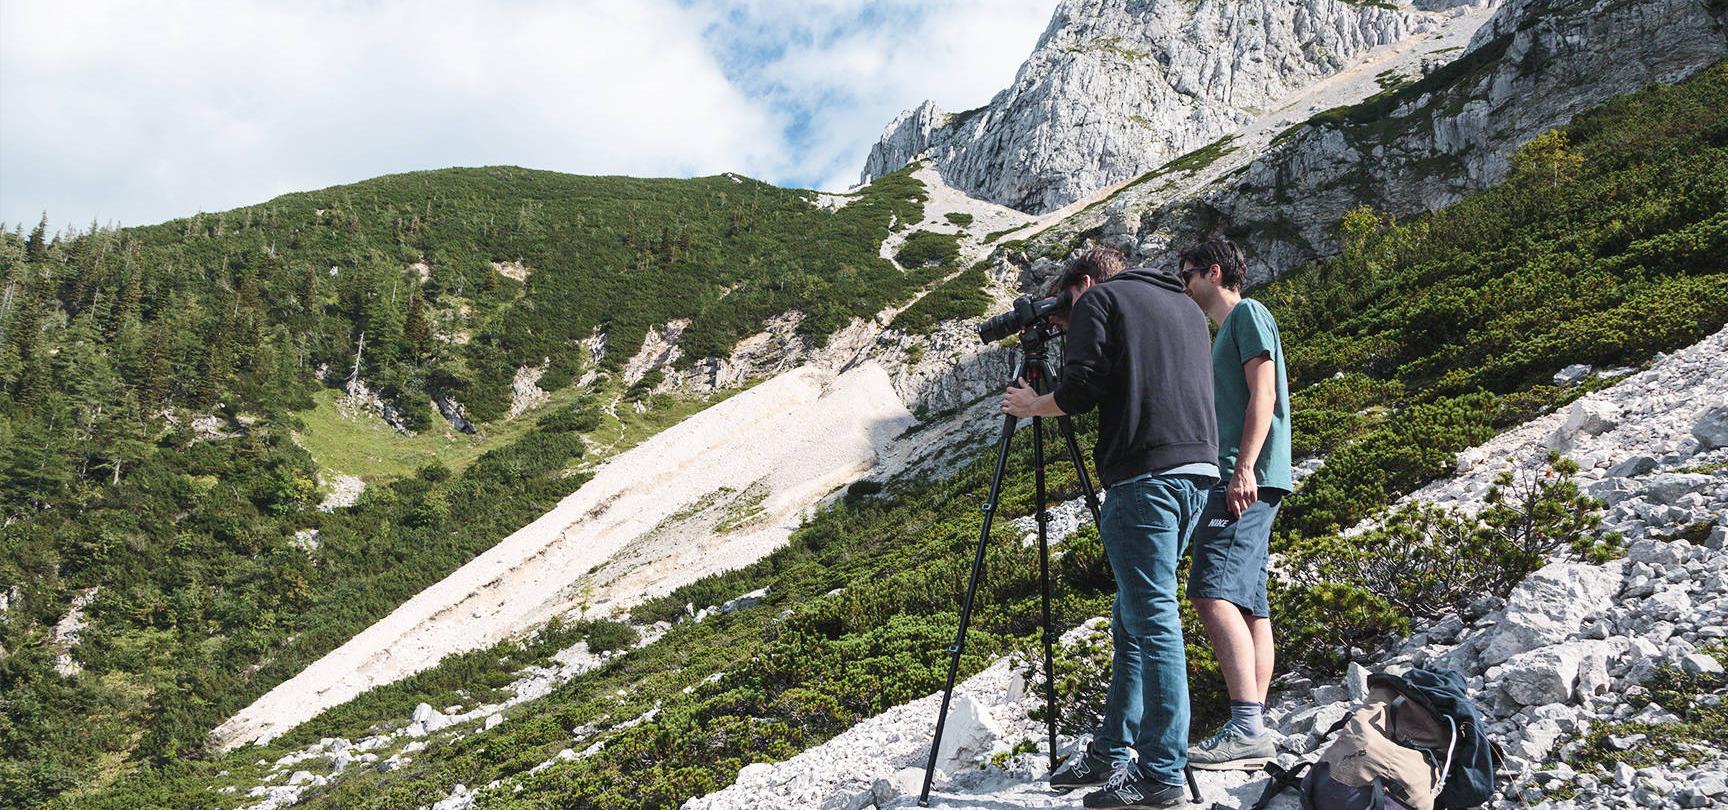 Zwei Männer fotografieren einen Berg.